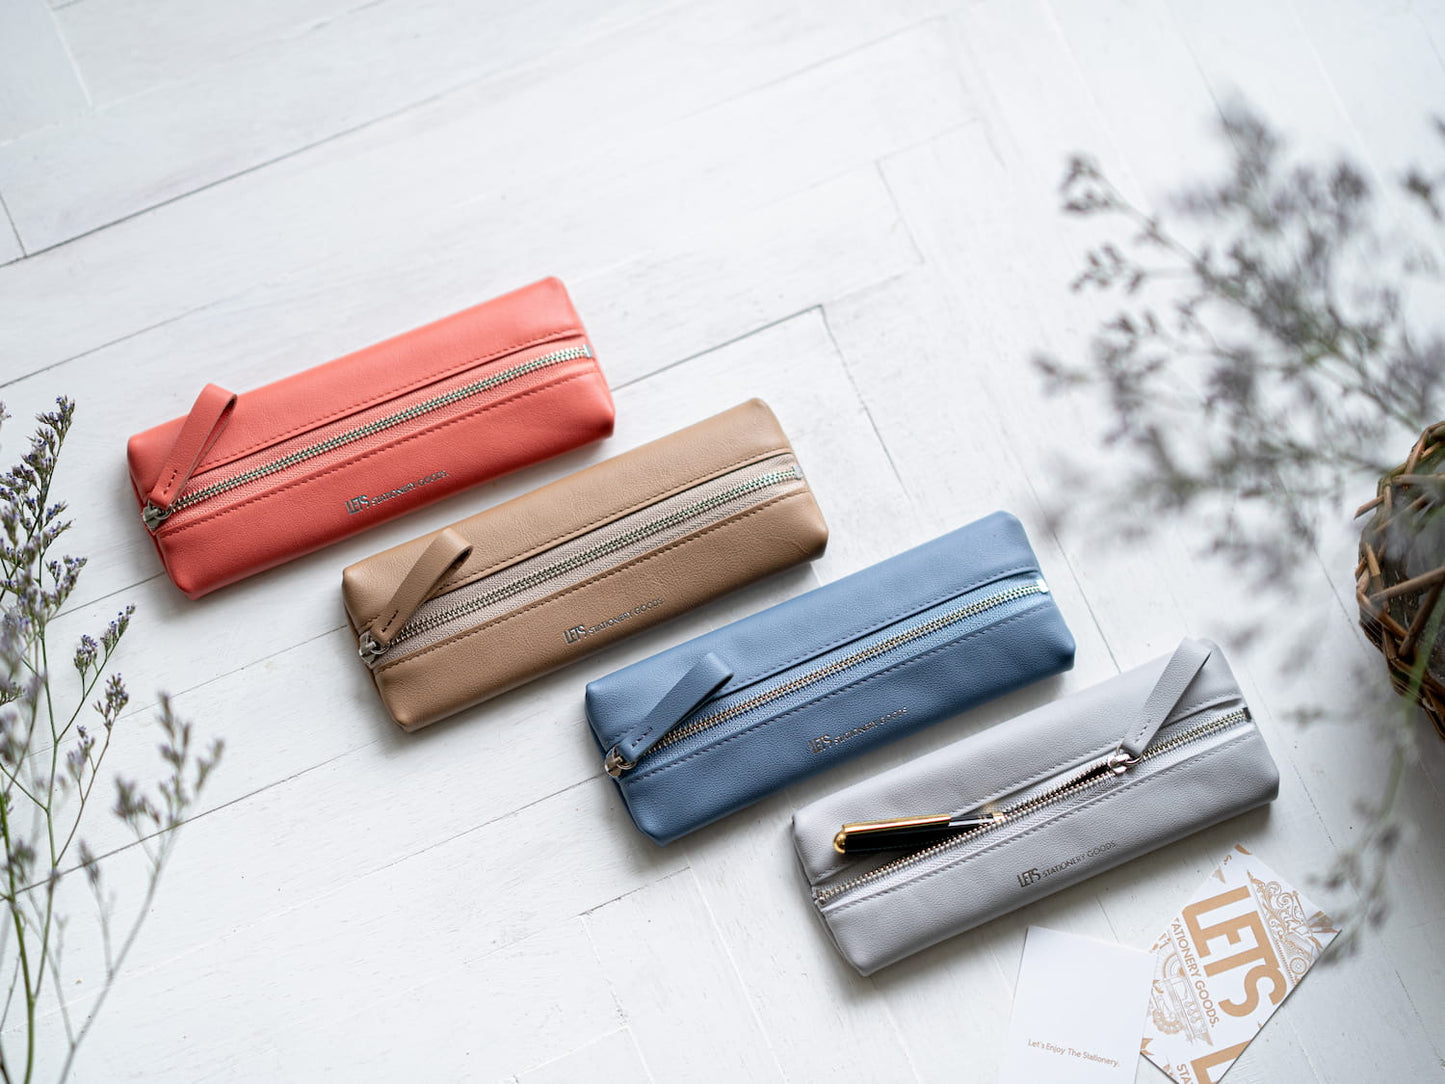 Leather pencil case Pentaboric -Flamingo-